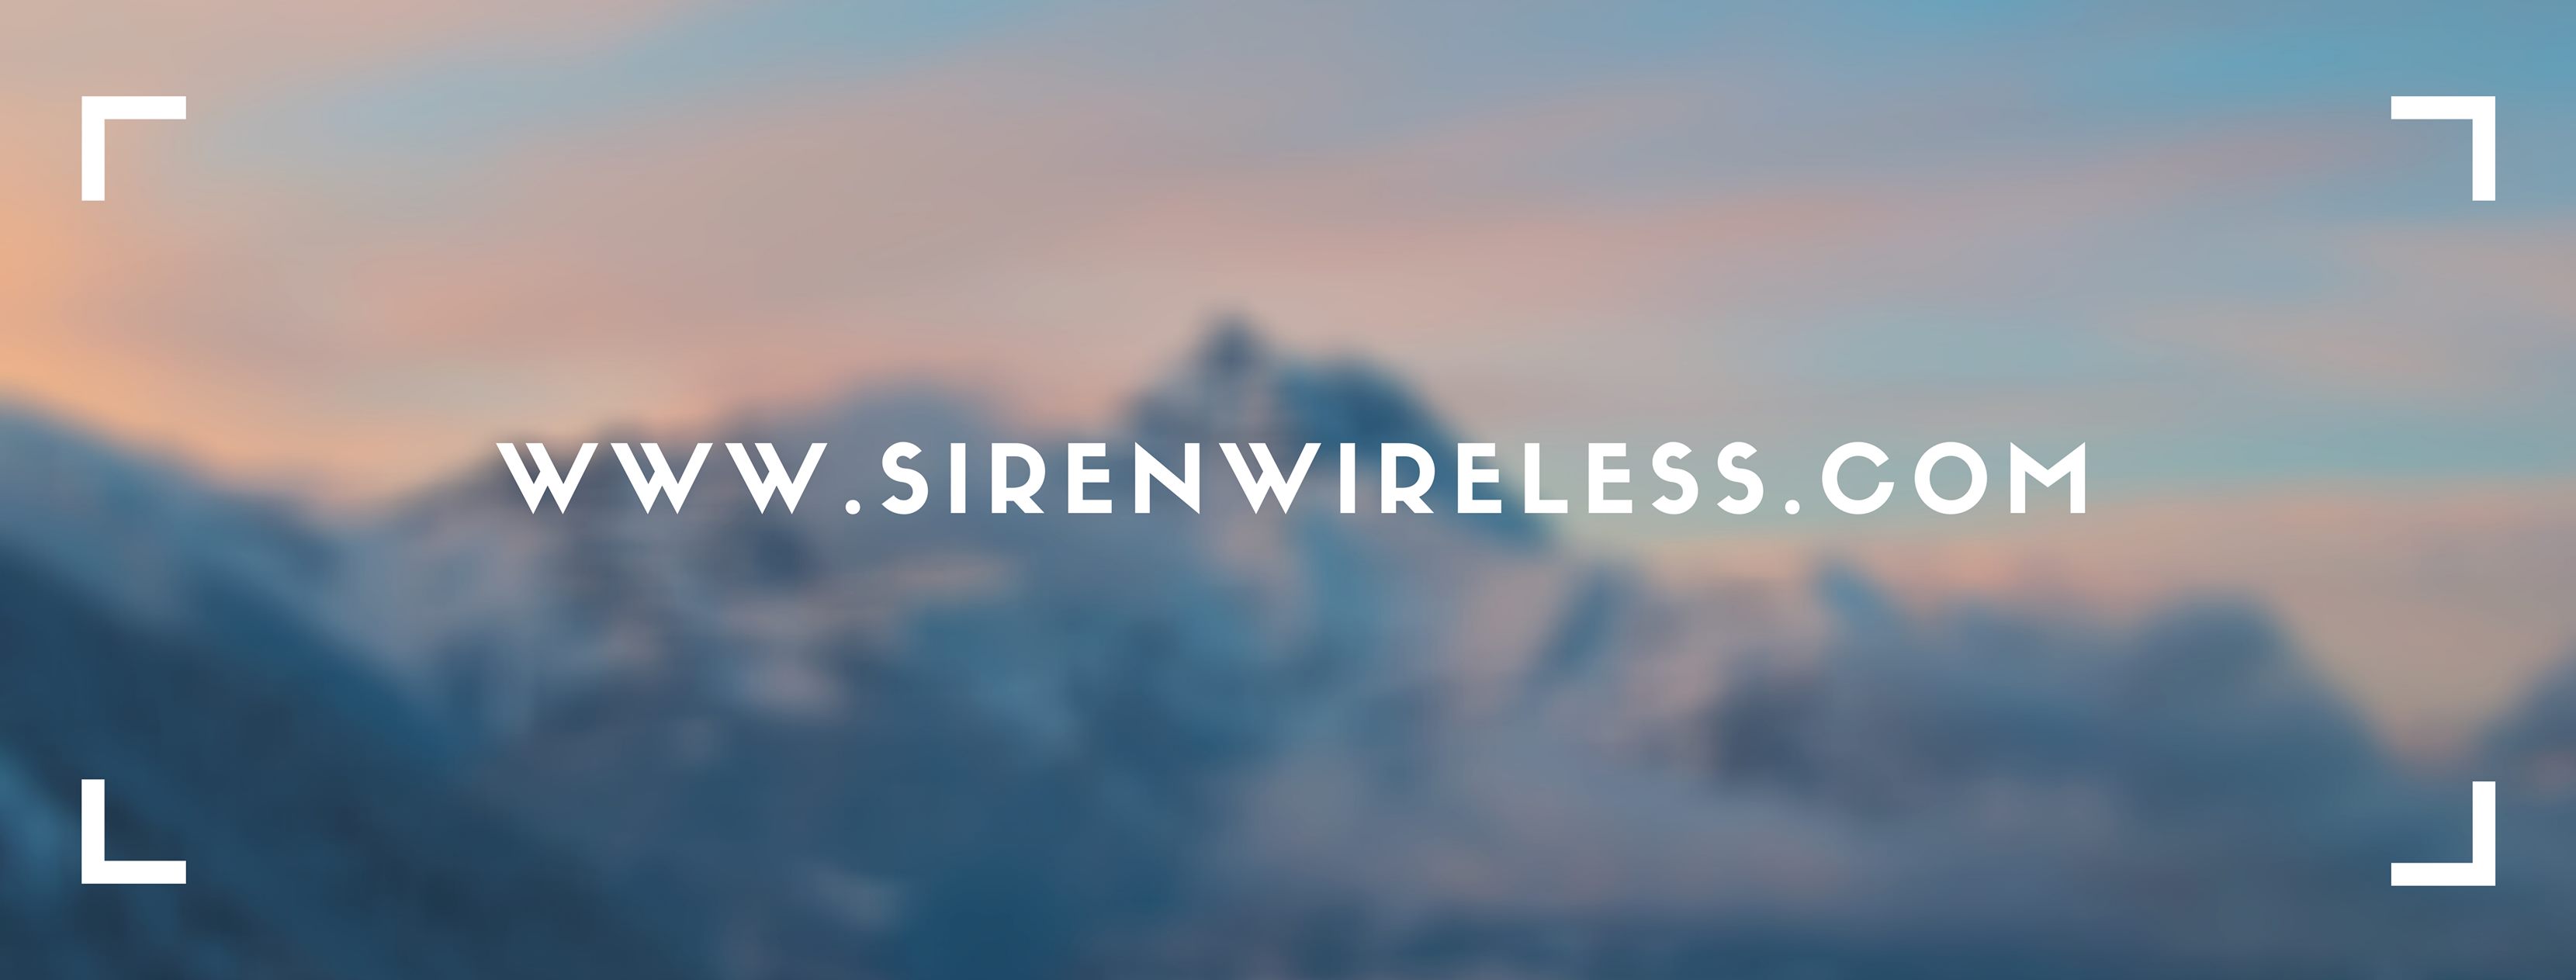 Siren Wireless Cover Image